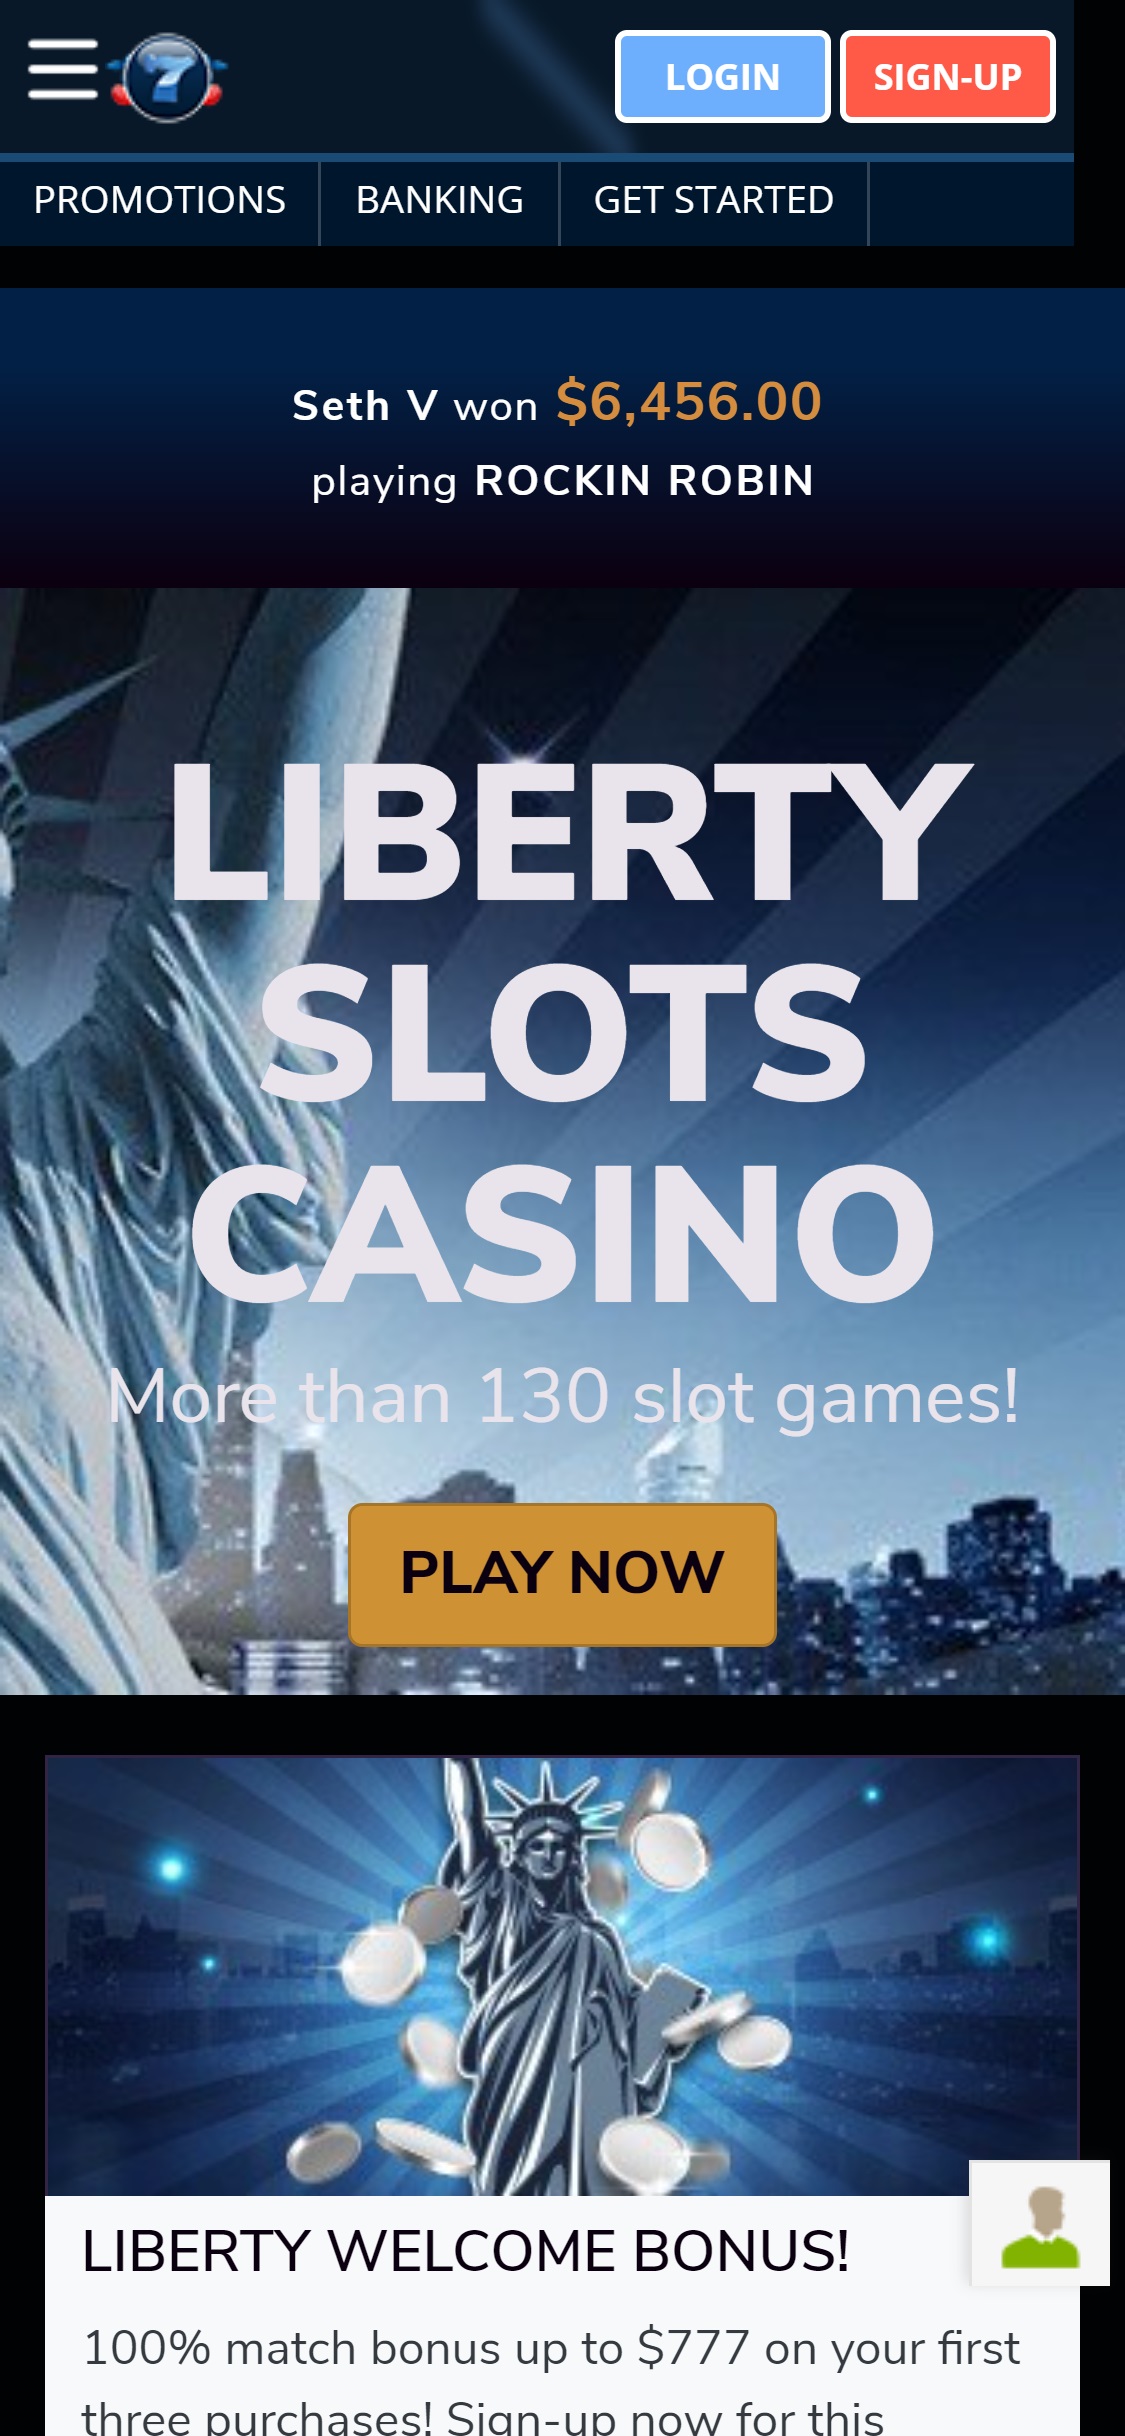 Liberty Slots Casino Mobile Review